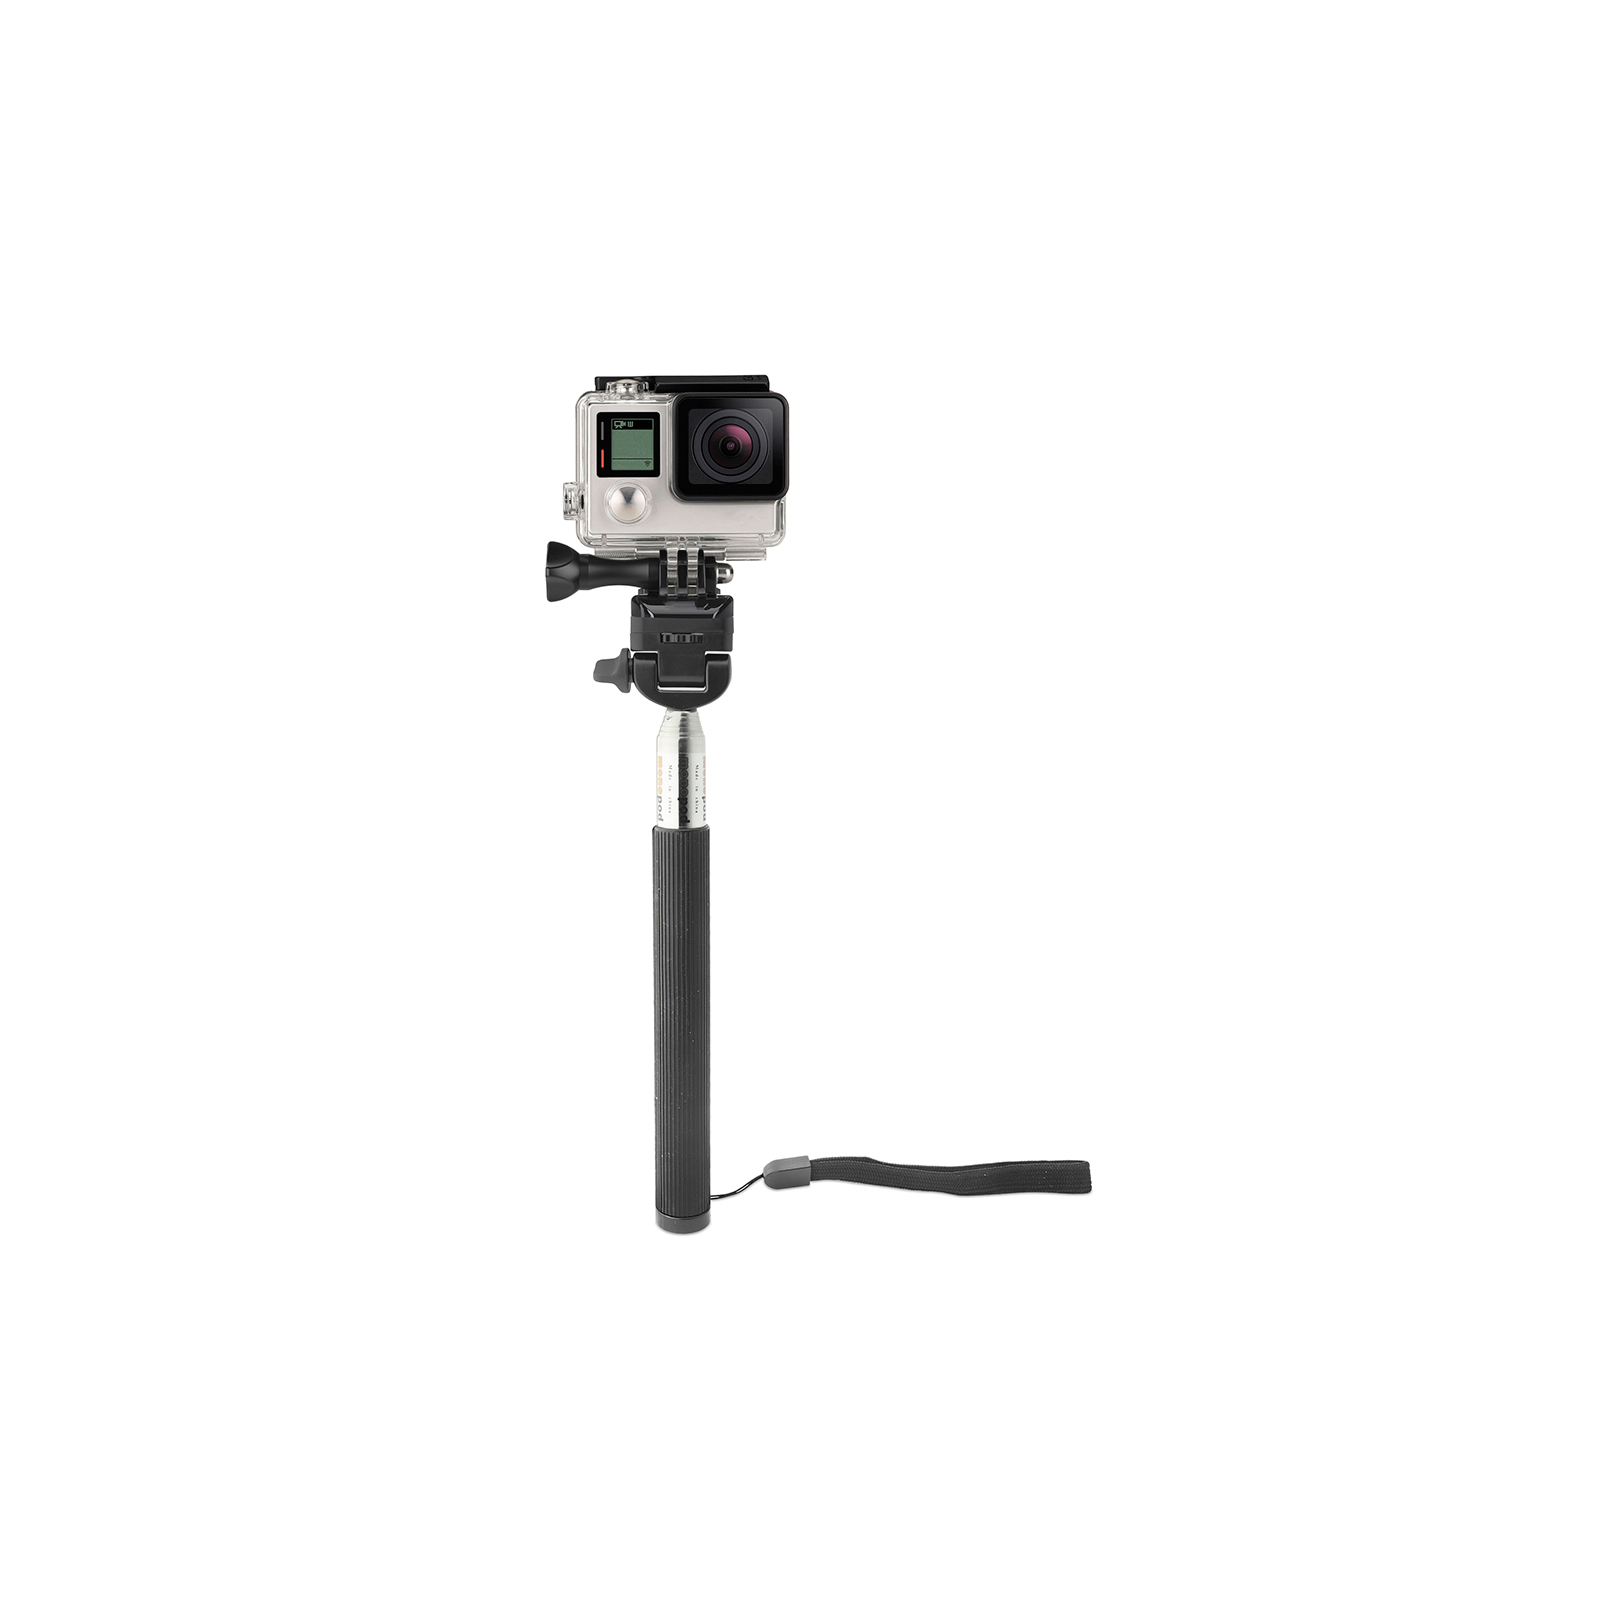 Аксесуар до екшн-камер AirOn 3в1: монопод, крепления-адаптери для екшн-камеры и телефона (AC161)